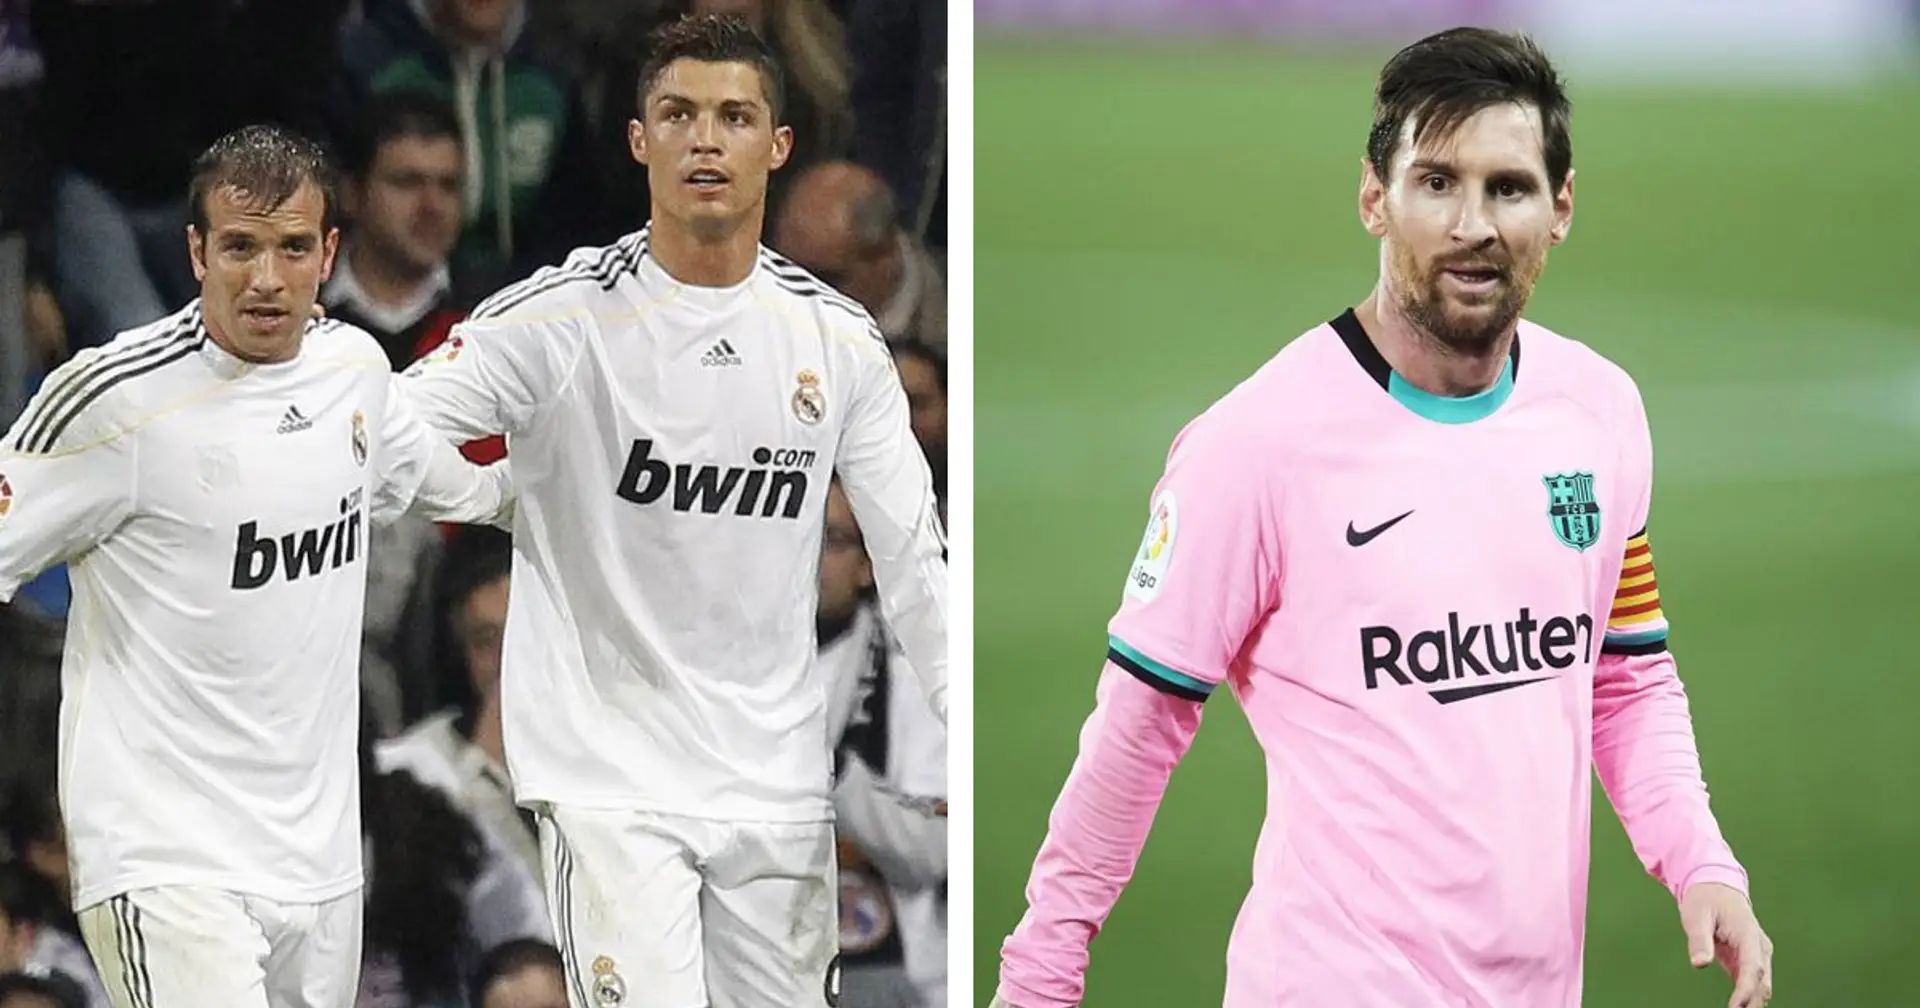 Ex-Madridista Van der Vaart explains why he rates Cristiano Ronaldo above Leo Messi